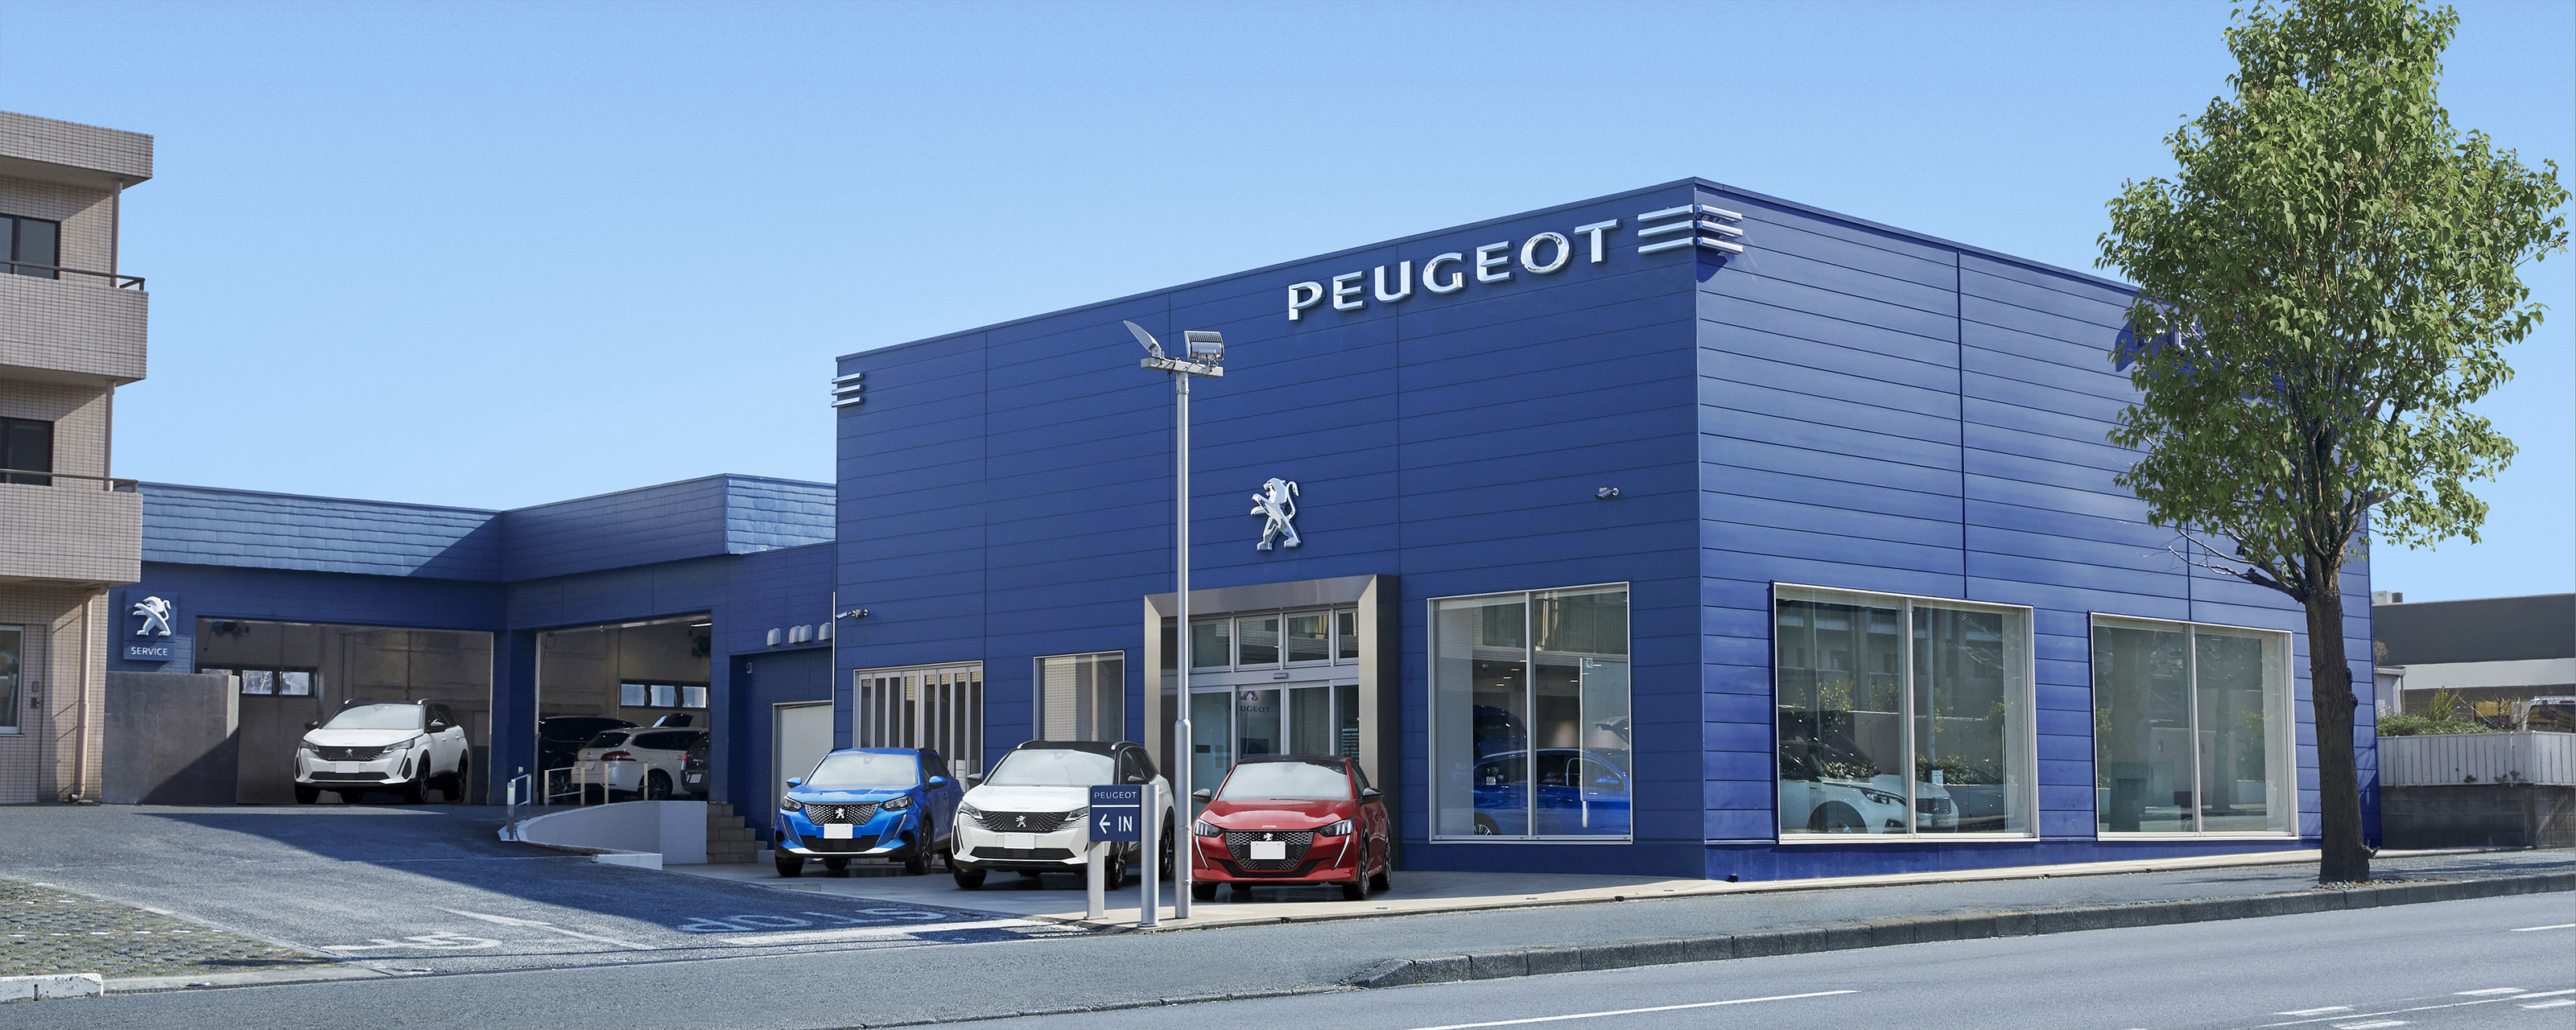 Peugeot_YokohamaAoba_3200_1280.jpg